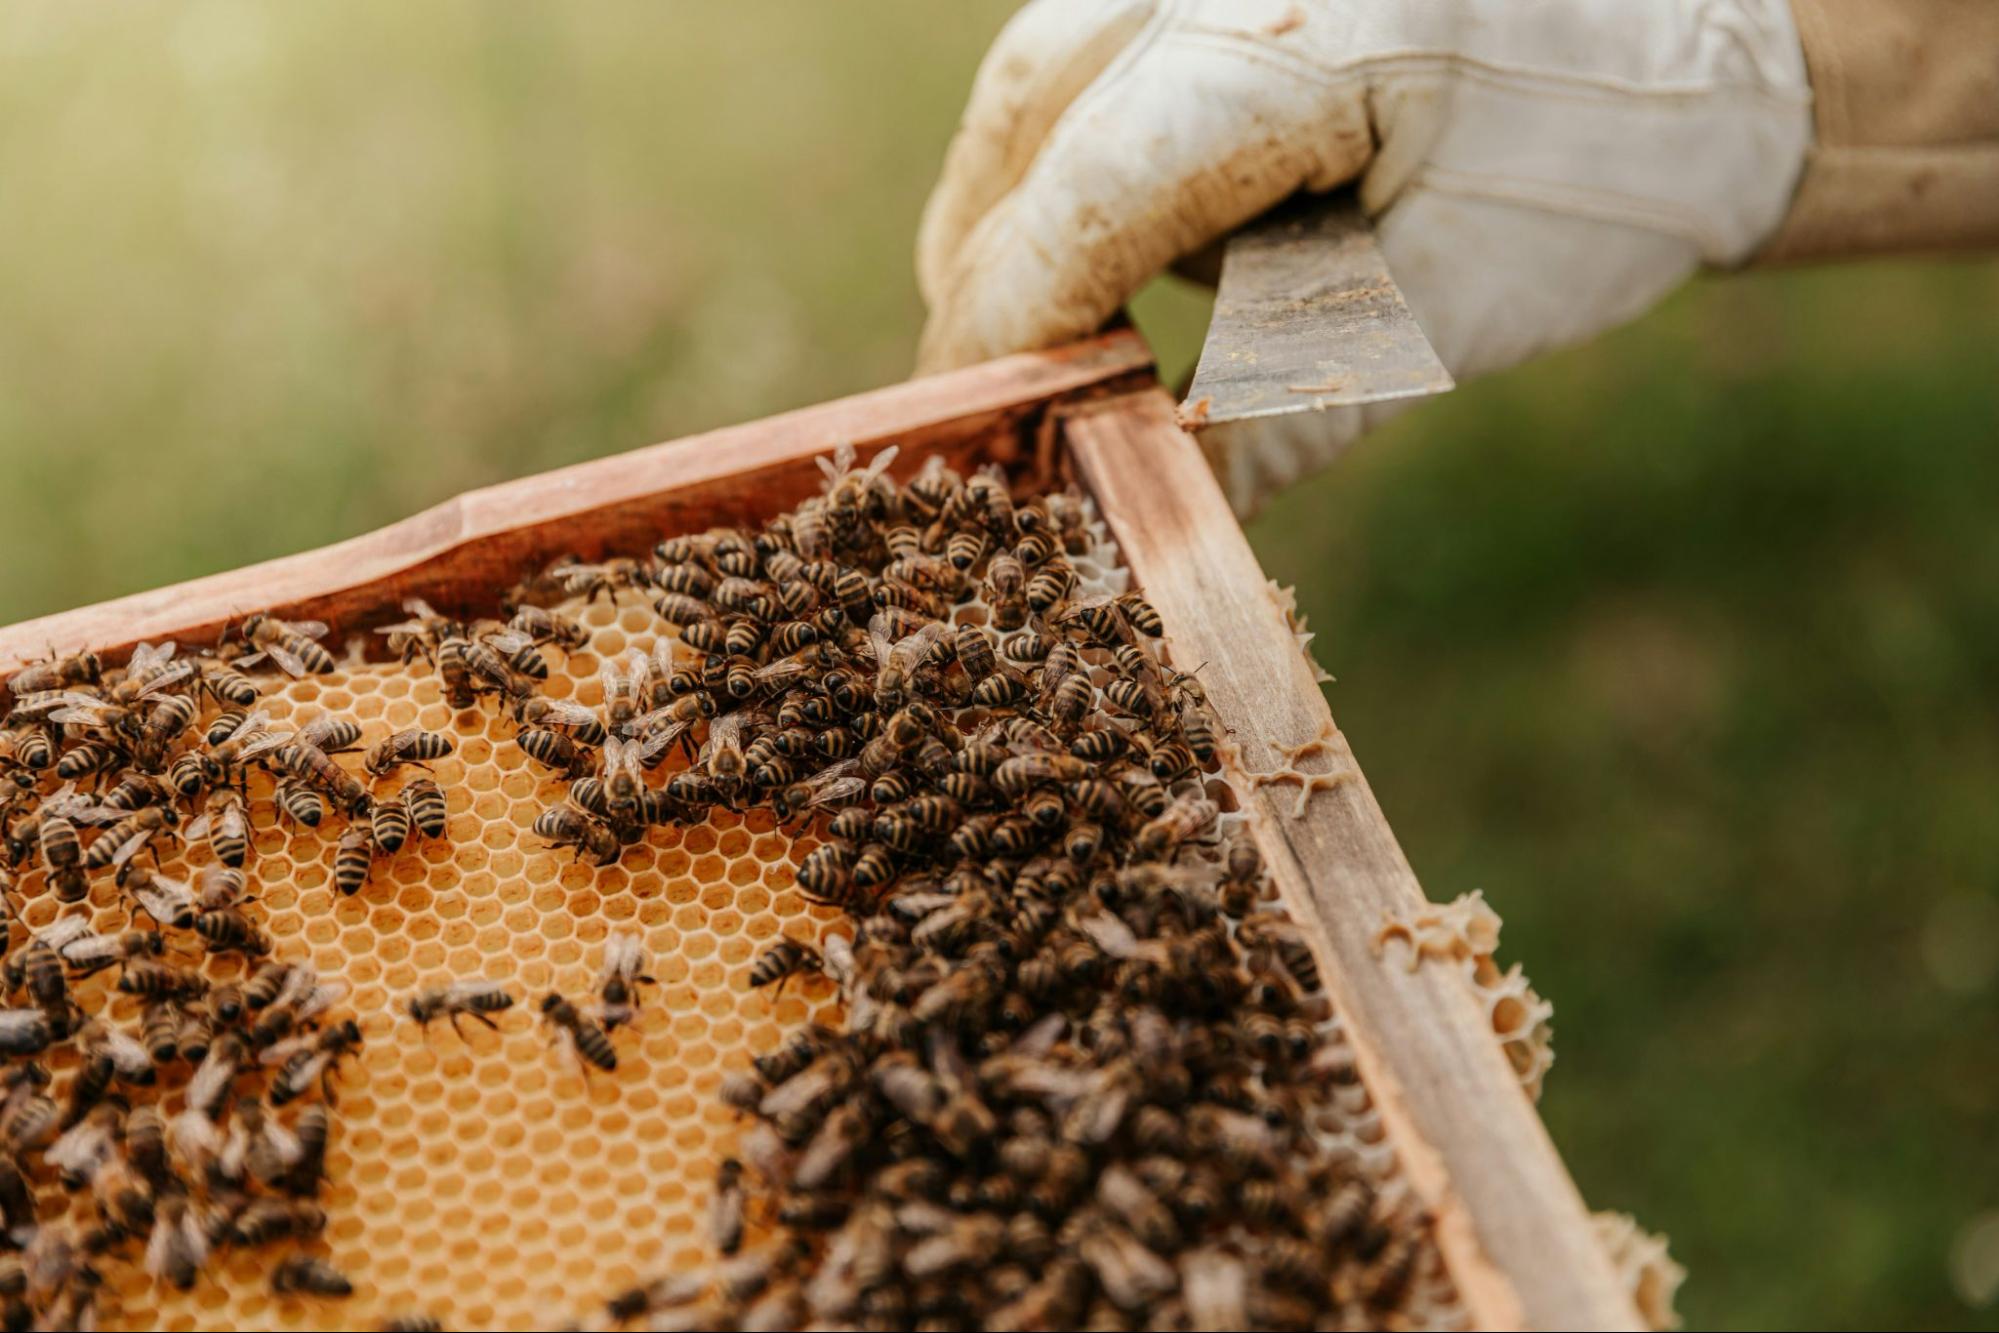 beekeeper inspecting honeycomb frame